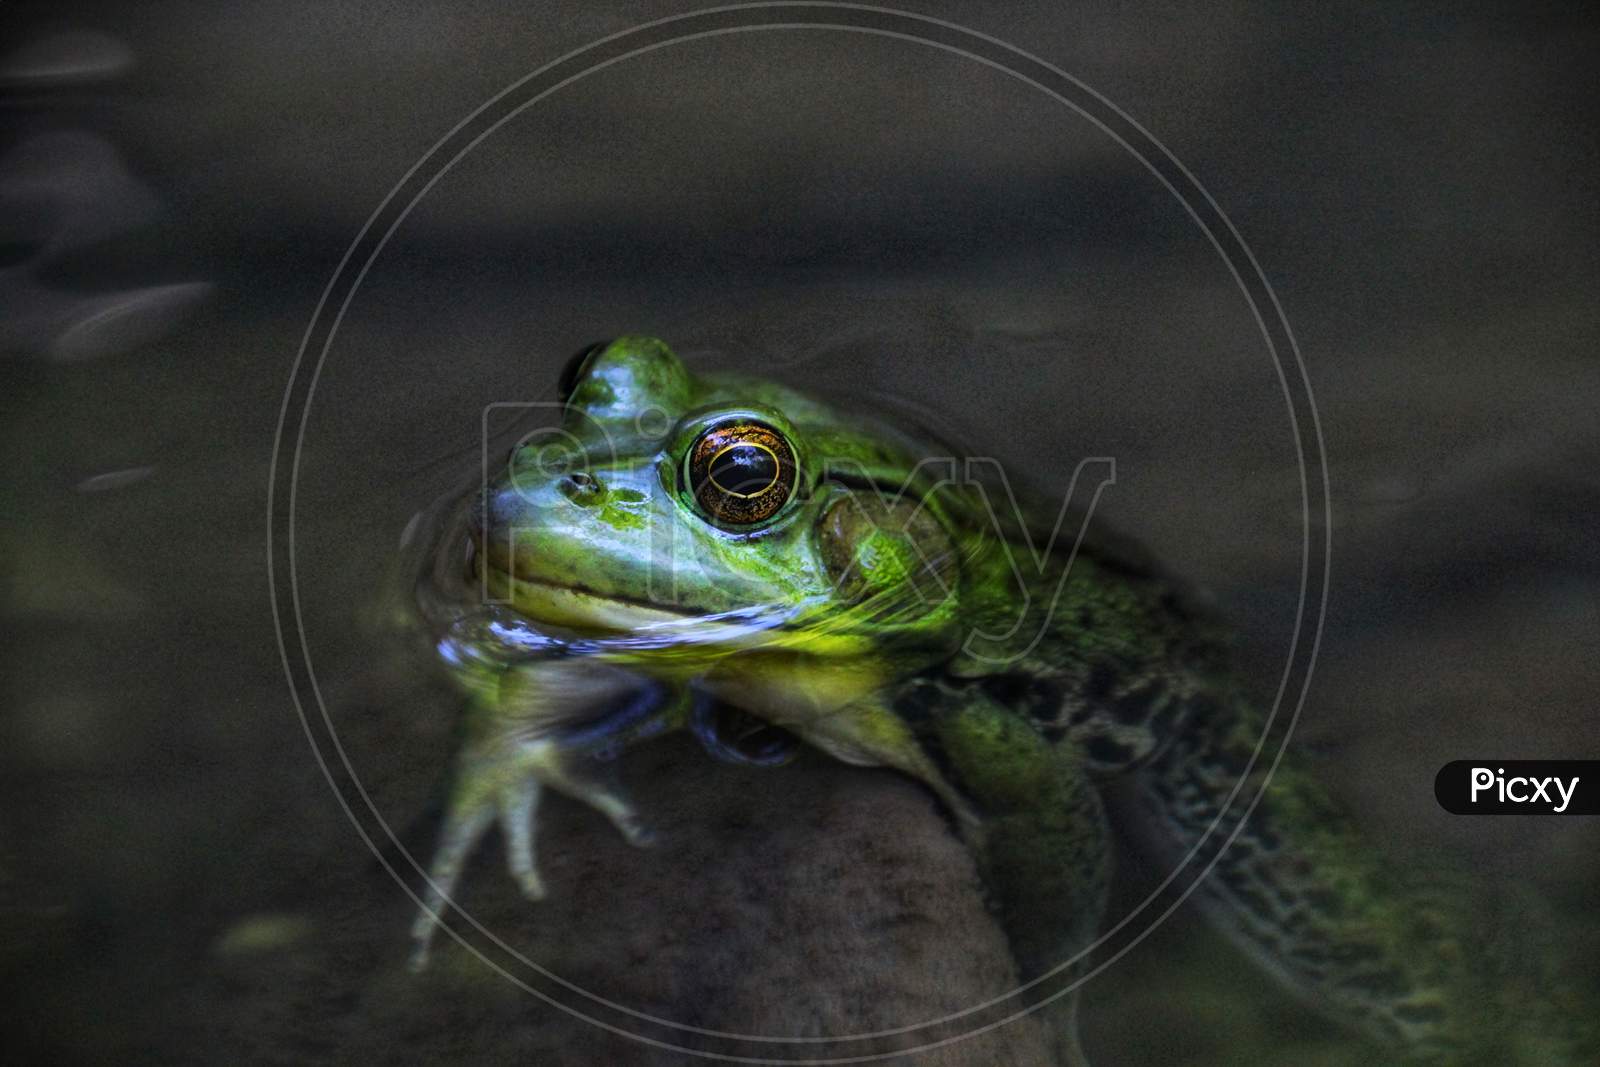 Frog image captured under water